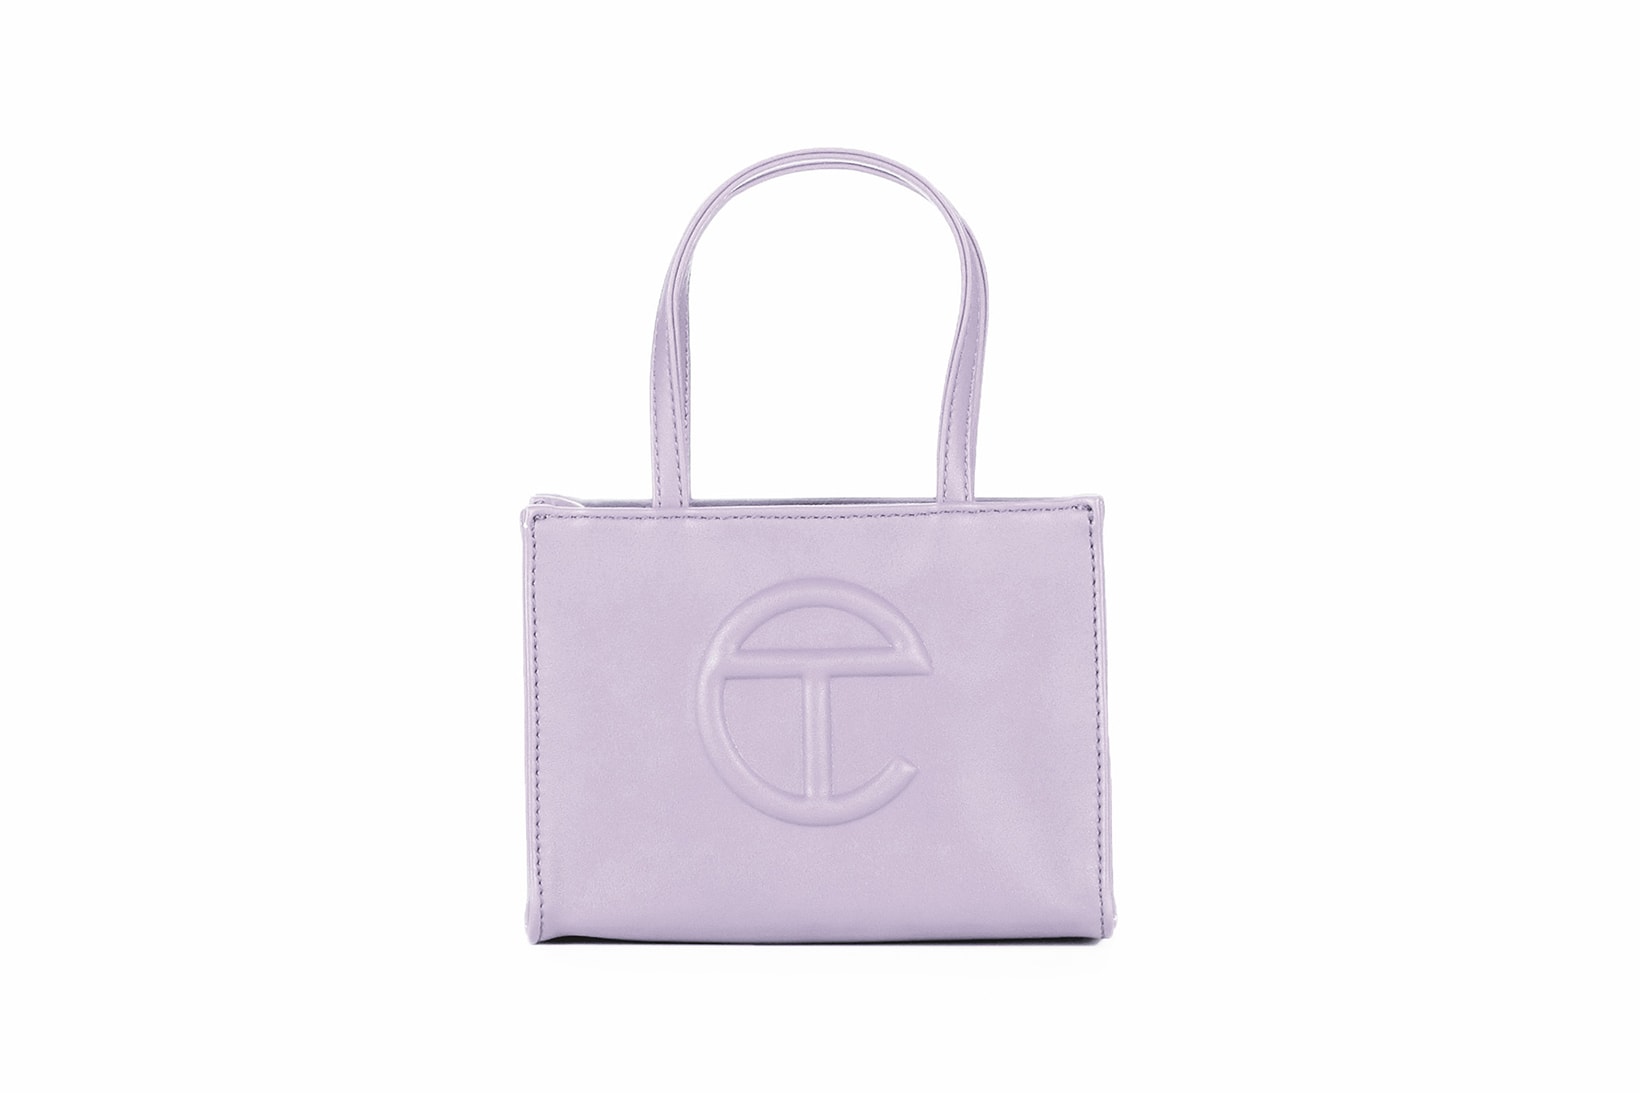 Telfar Shopping Bag New Lavendar Purple Color Small